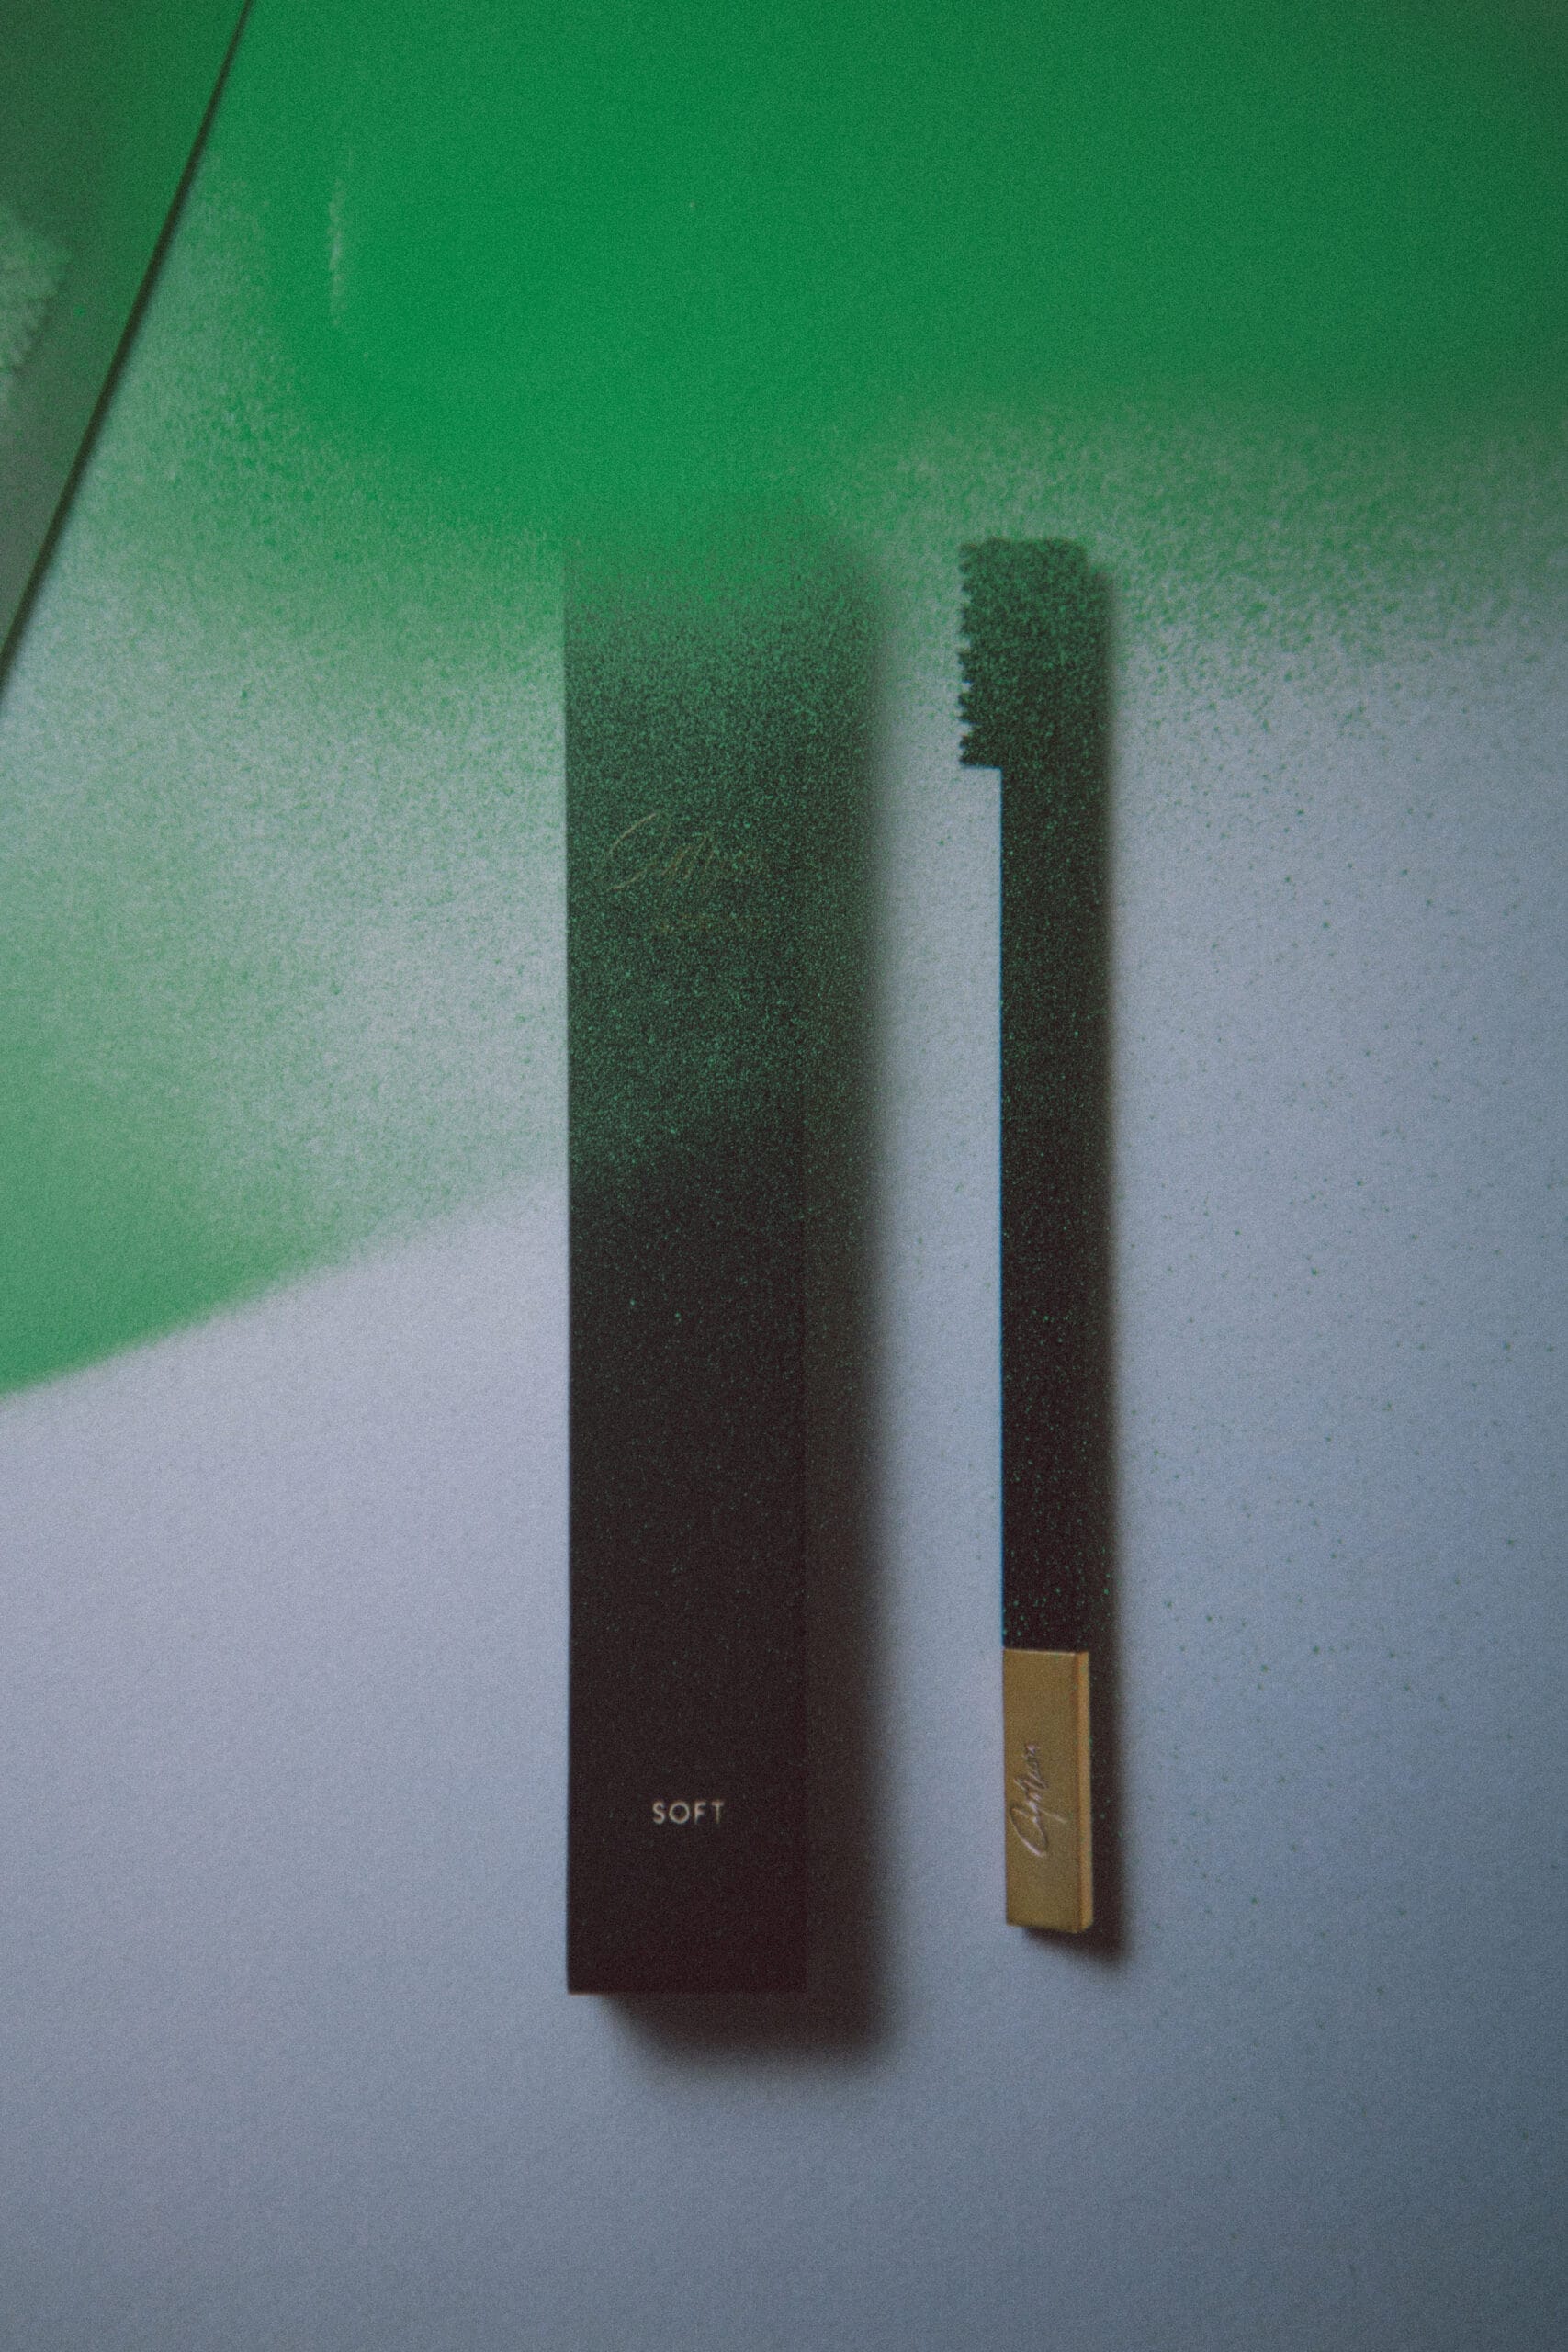 Black Gold designer toothbrush SLIM by Apriori